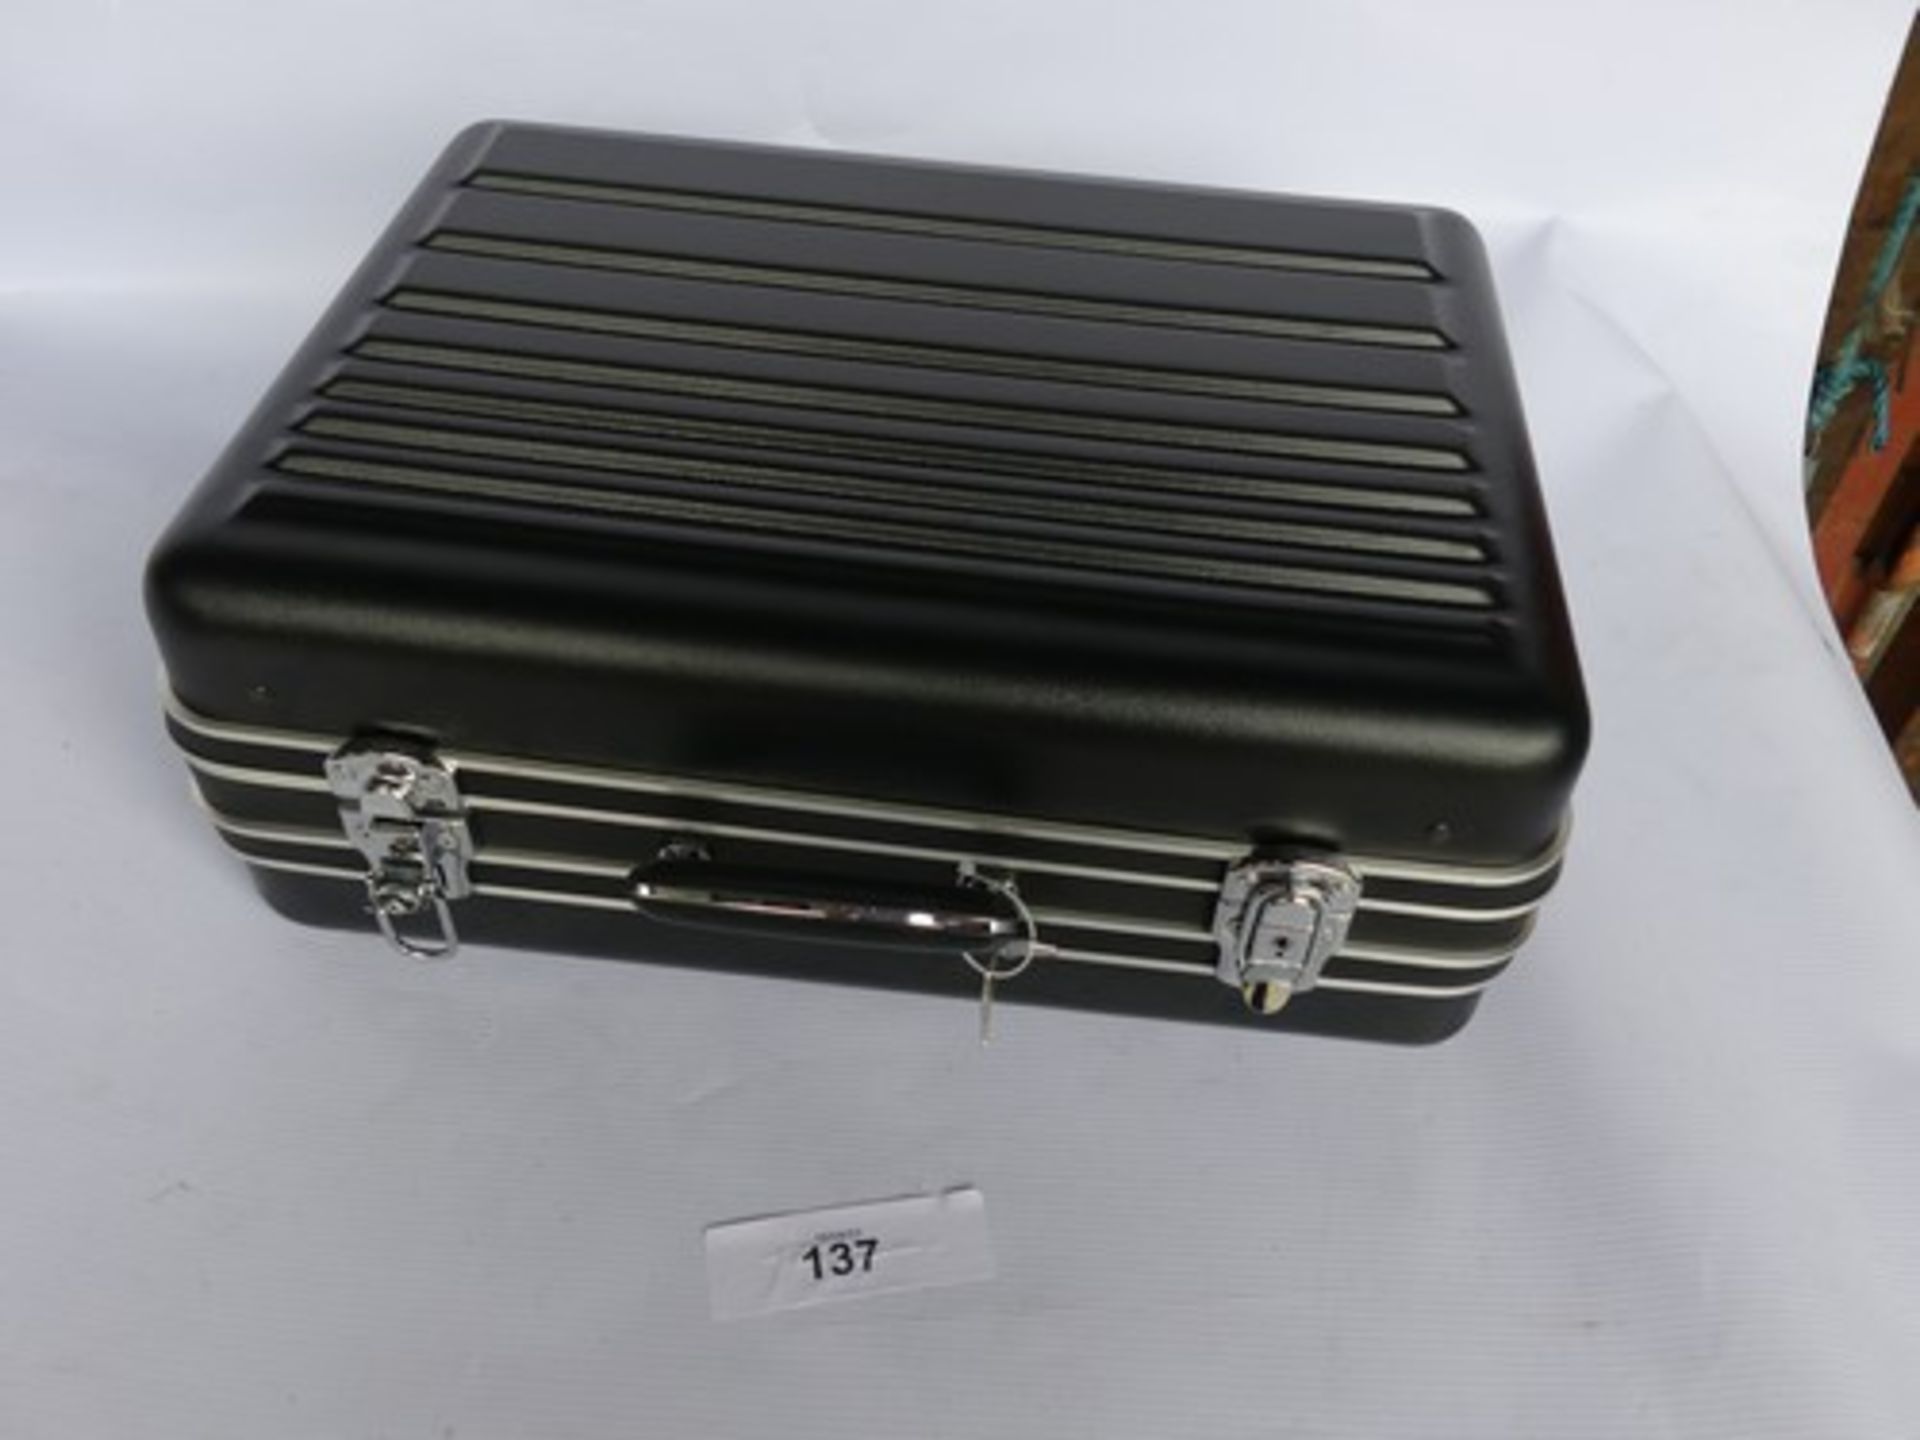 1 x consort plastic tool box with keys, size 50cm x 36cm x 20cm - New (SW4)